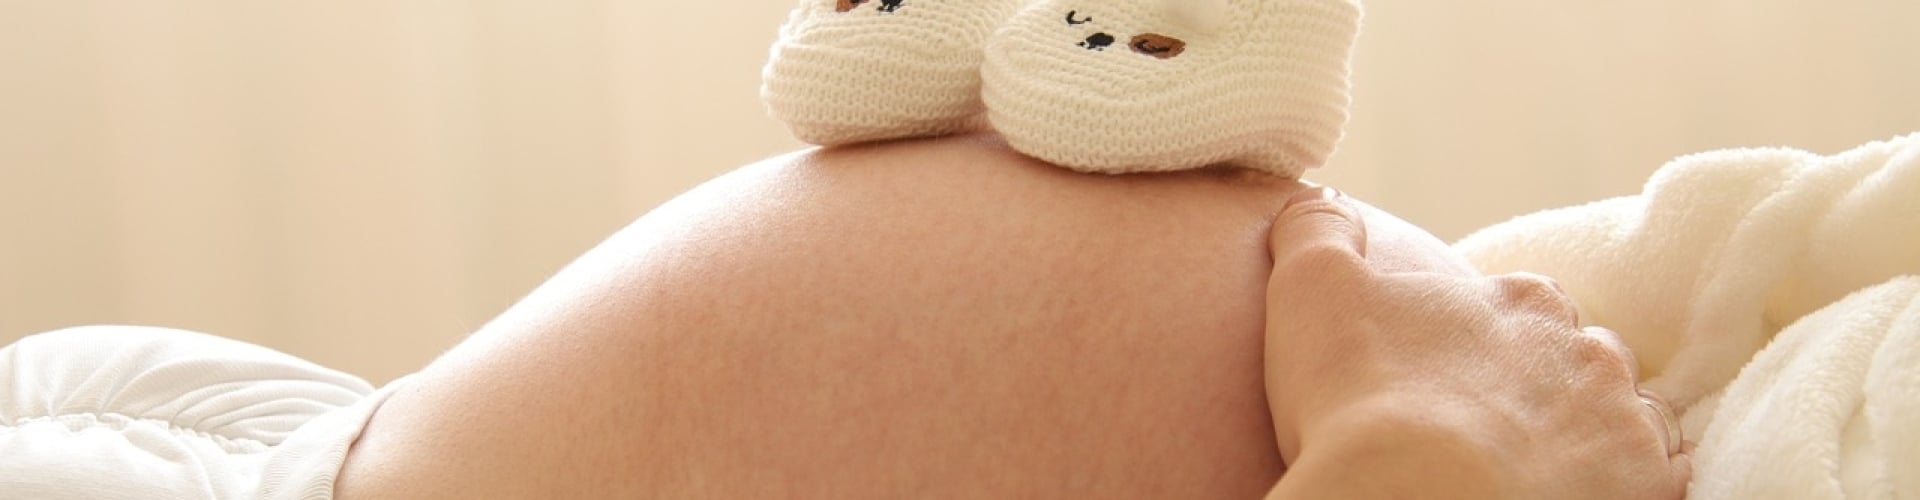 Zwangere vrouw op massagetafel